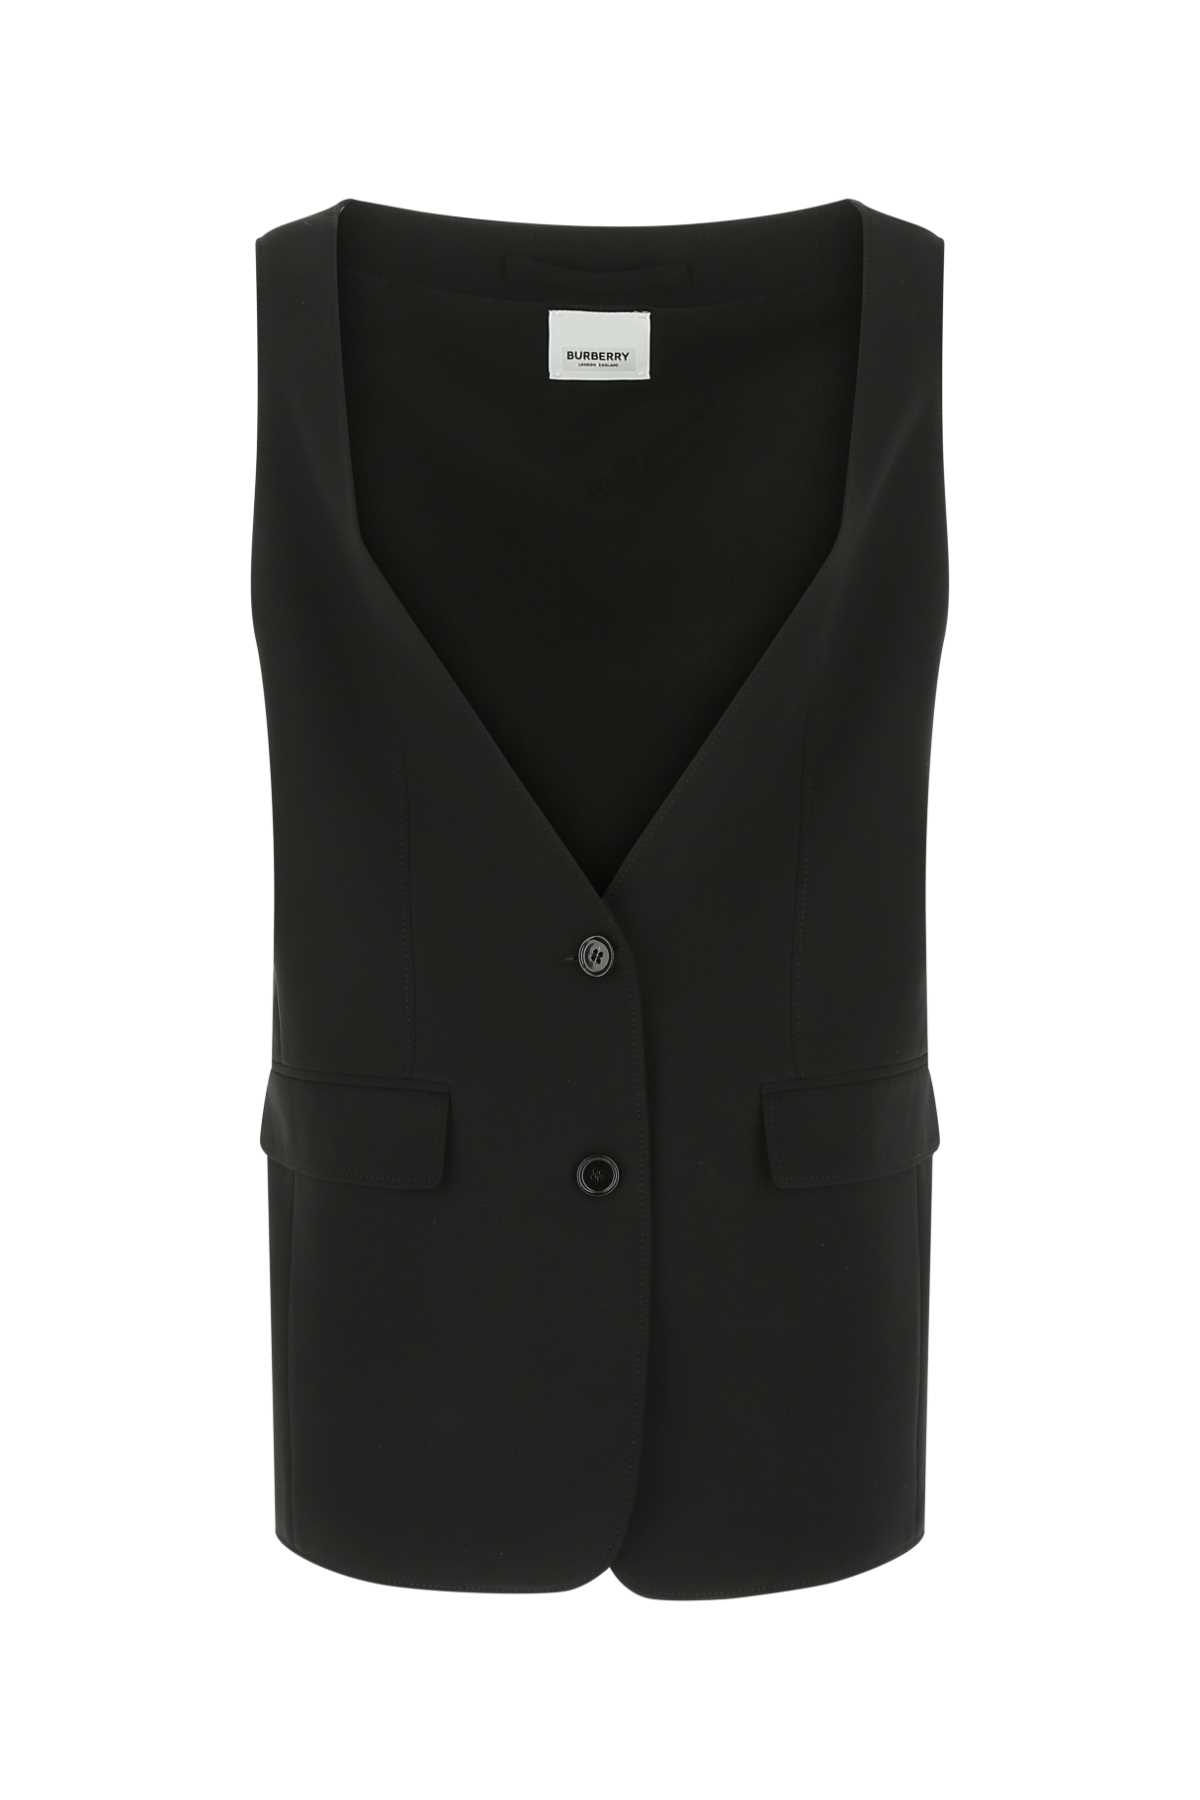 Burberry Black Silk Oversize Vest